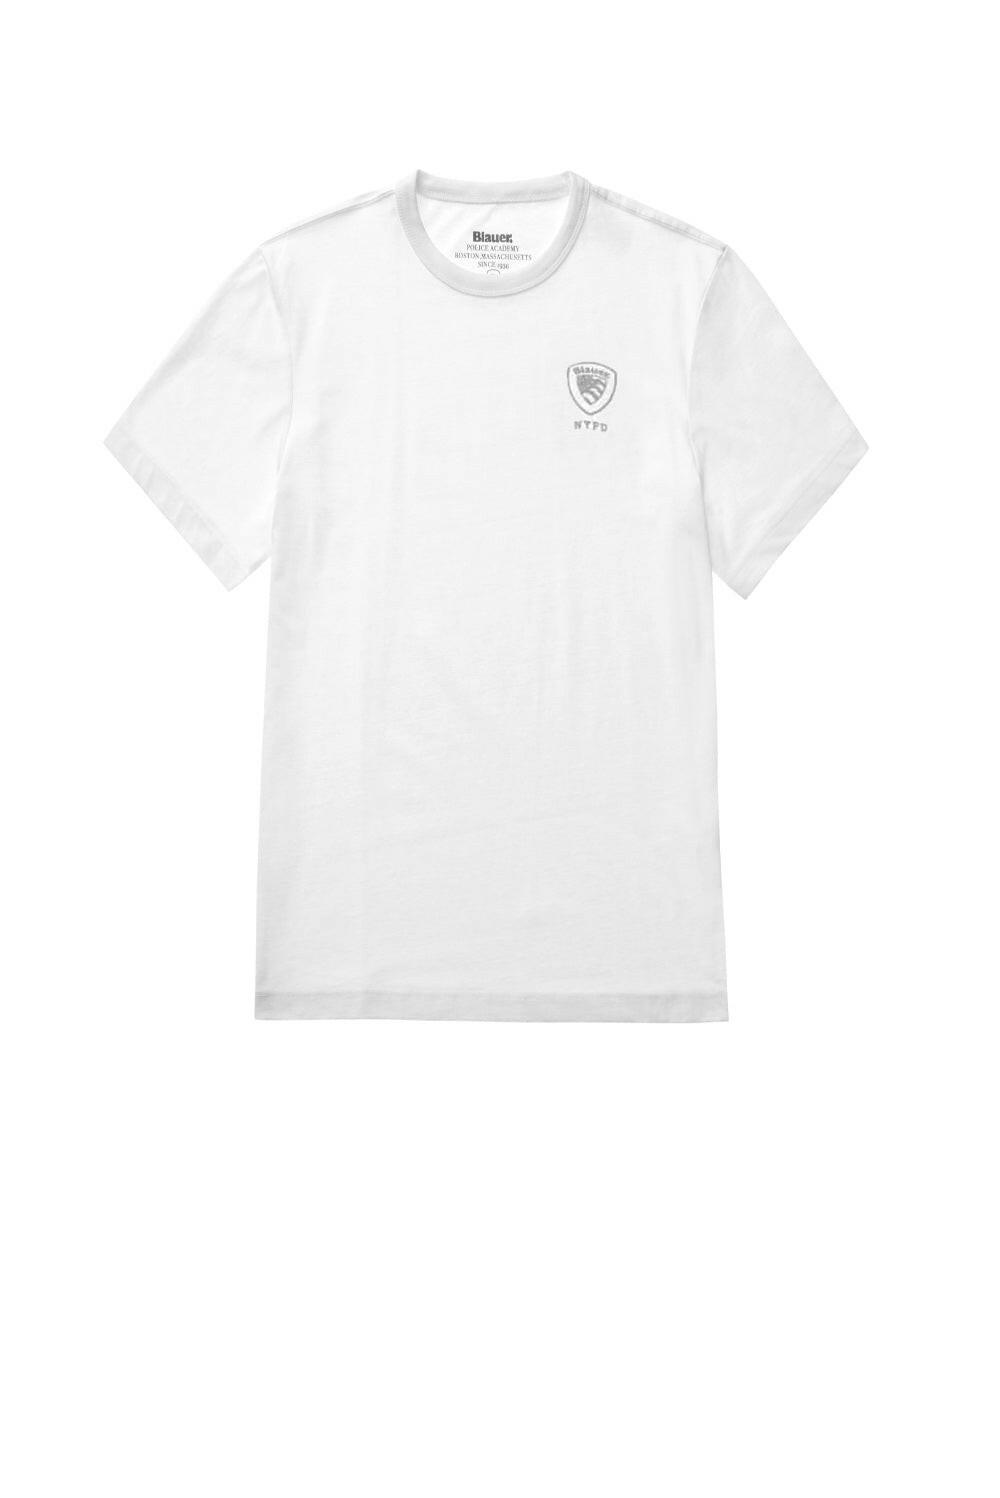  Blauer T-shirt Logo White Uomo - 1